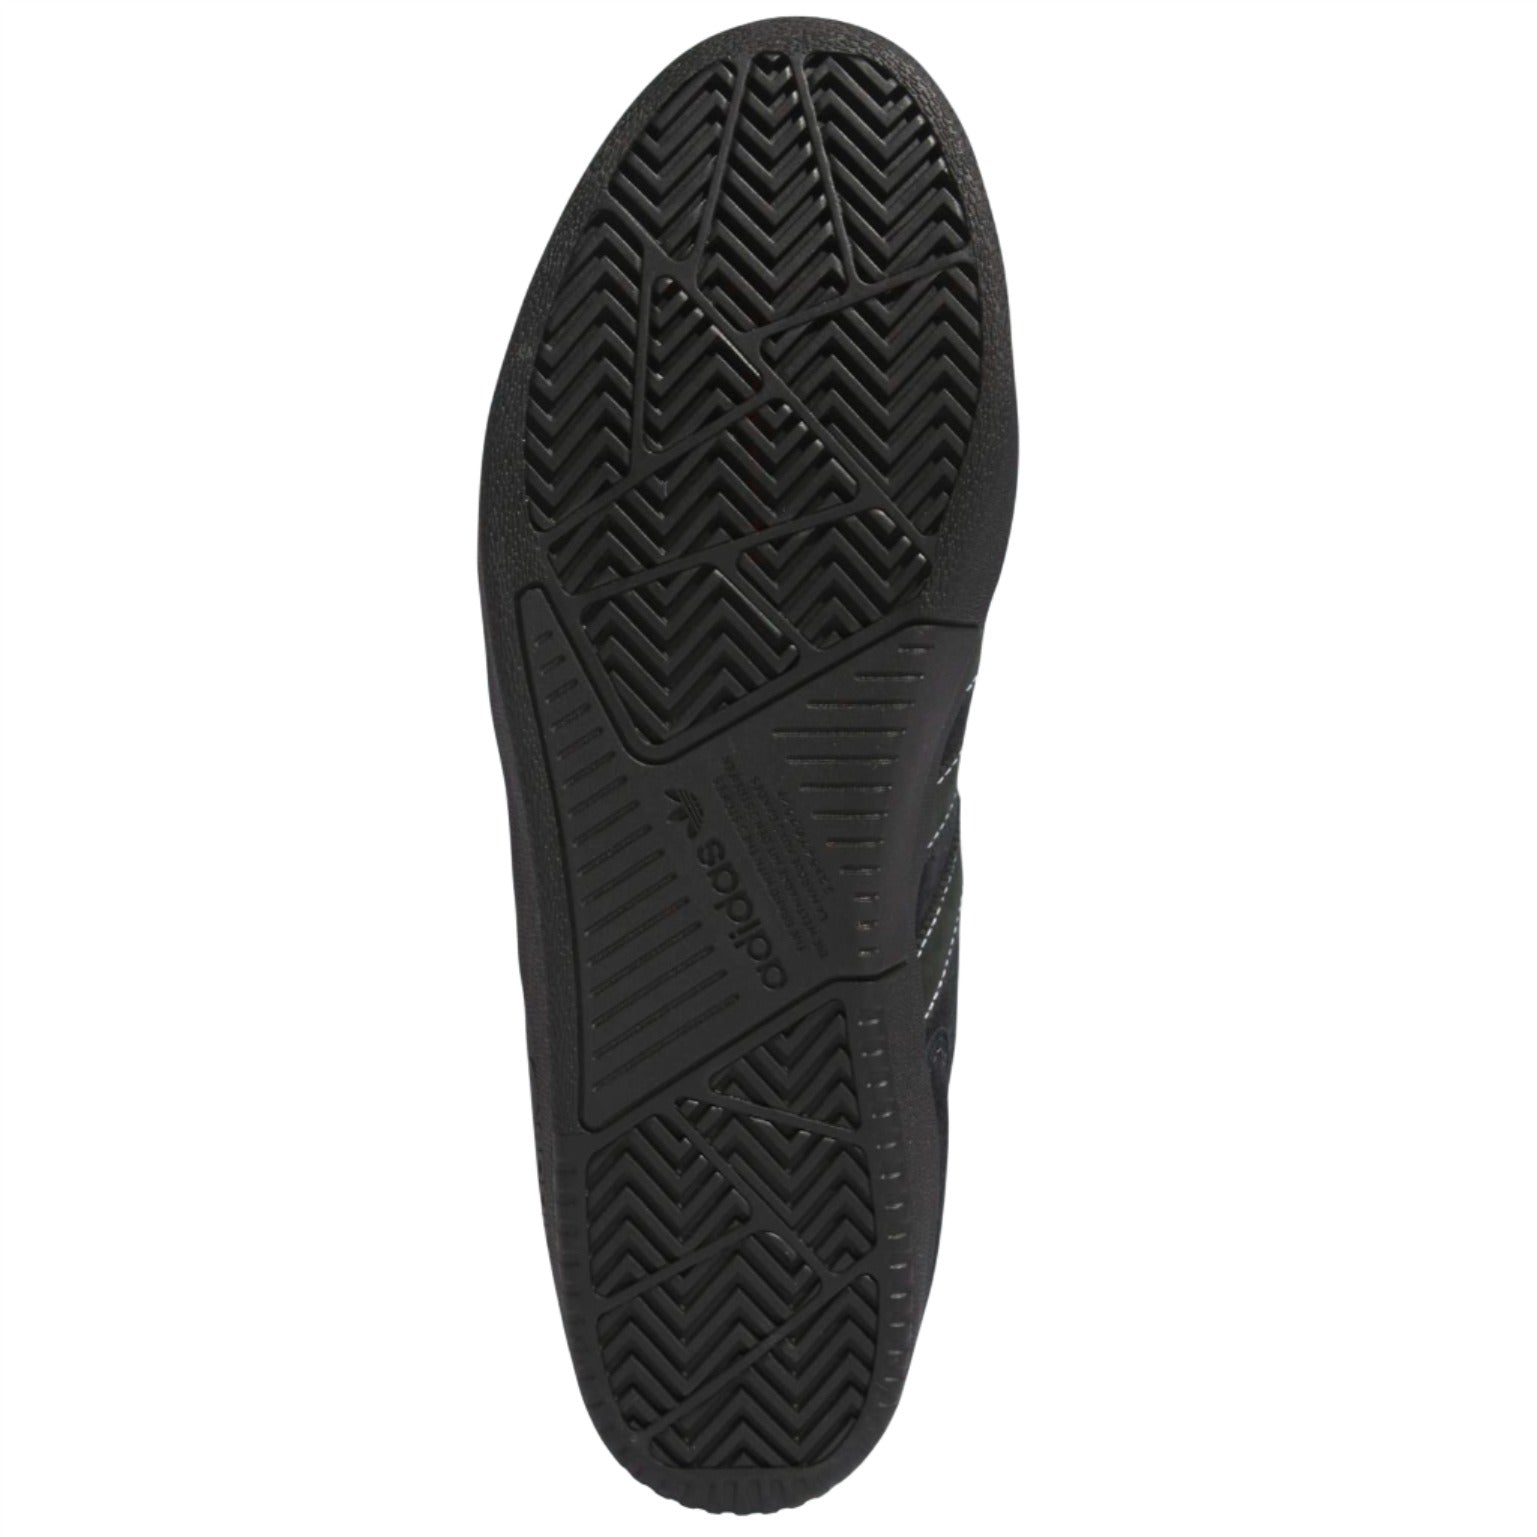 Core Black Tyshawn Low Adidas Skate Shoe Bottom